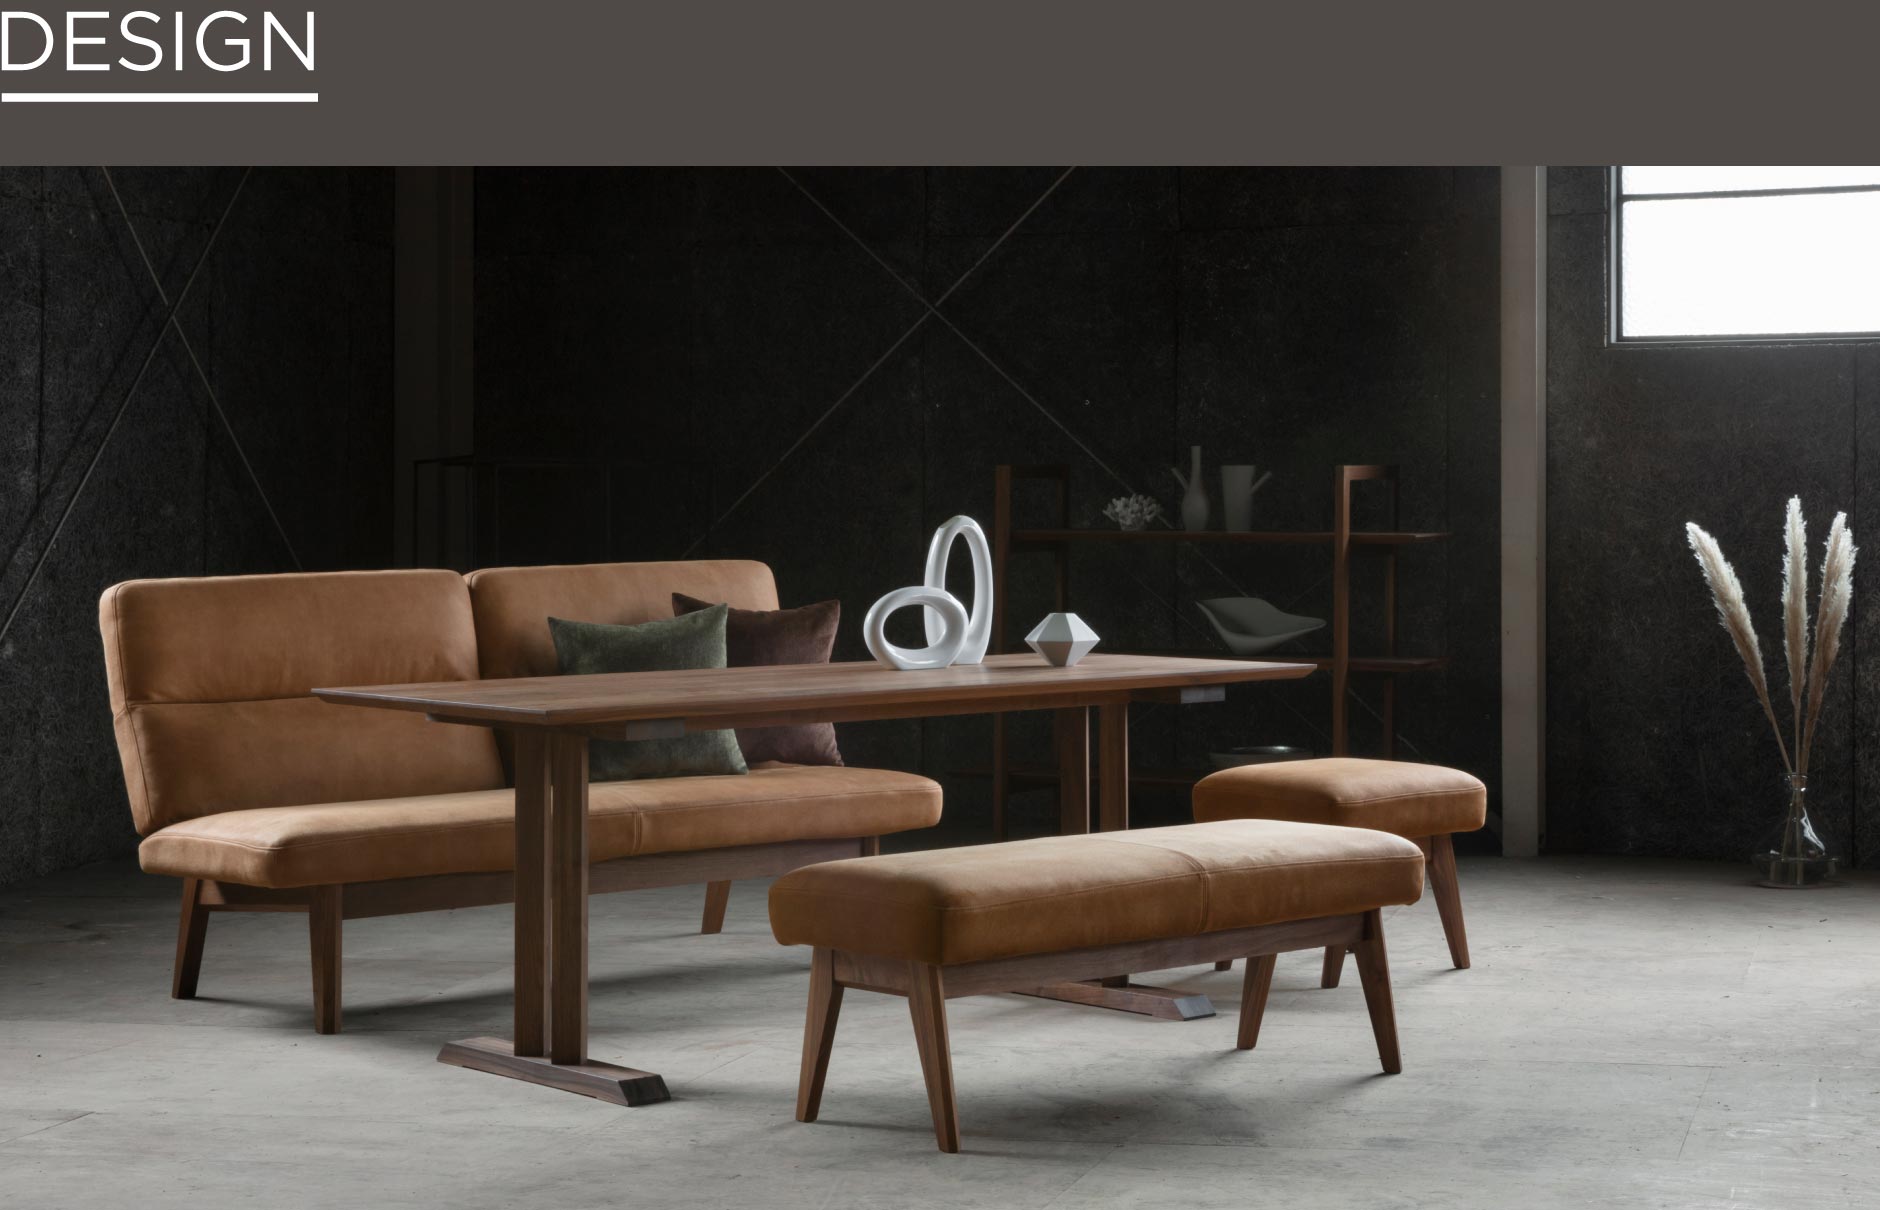 SOLID名古屋の中でも人気の家具。スマートな木製脚に厚めな座面が何とも優しいフォルムです。使う場所を選ばないマルチなスツール。